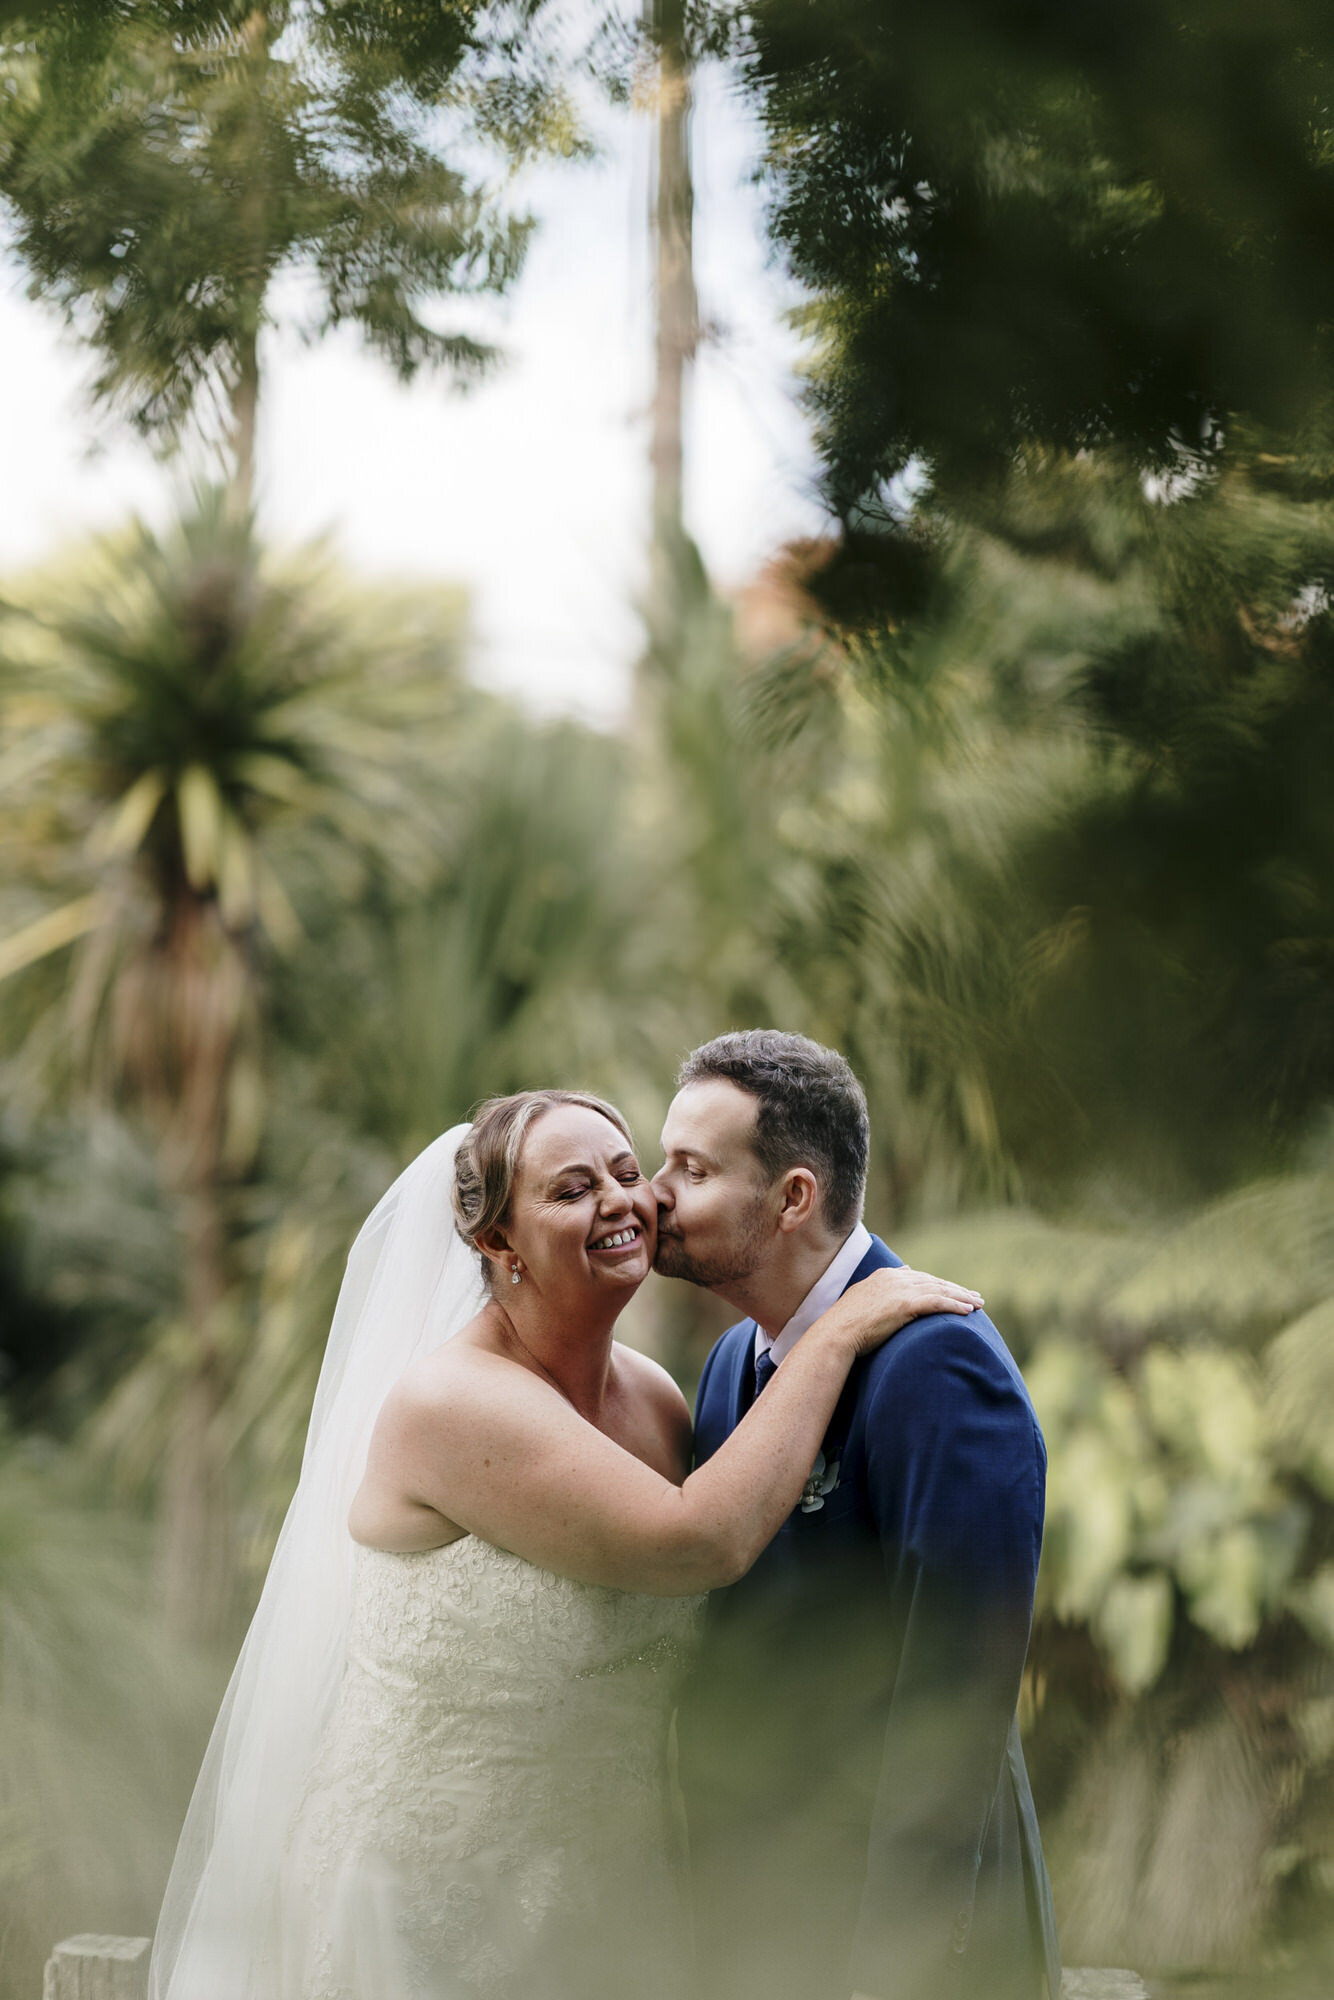 Markovina Vineyard Estate | Vineyard Wedding | Auckland Wedding Venue | Kemeu Venue | Auckland Wedding Photographer and Videography | Intimate Wedding